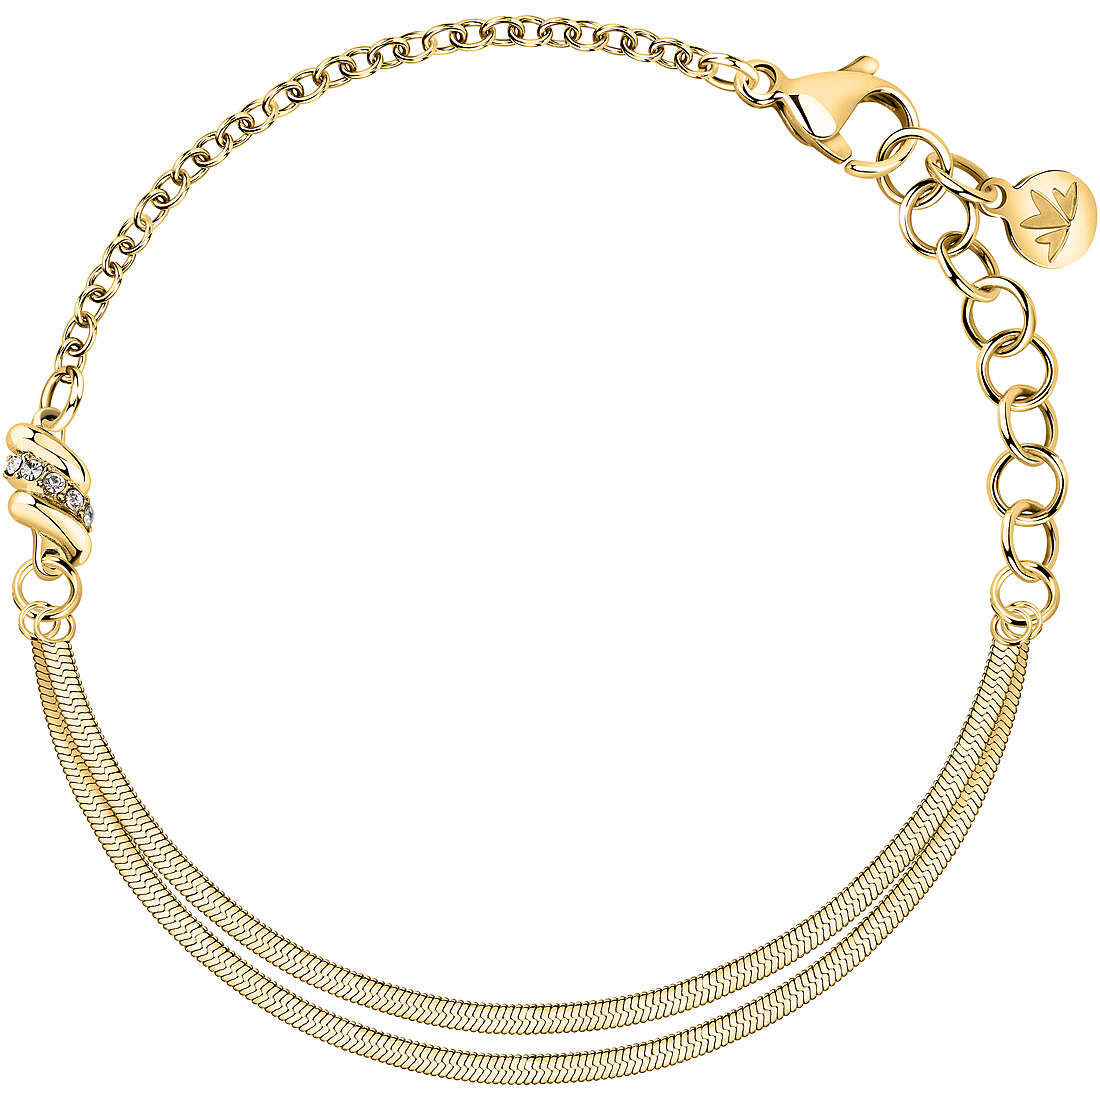 bracelet woman jewellery Morellato Torchon SAWZ05